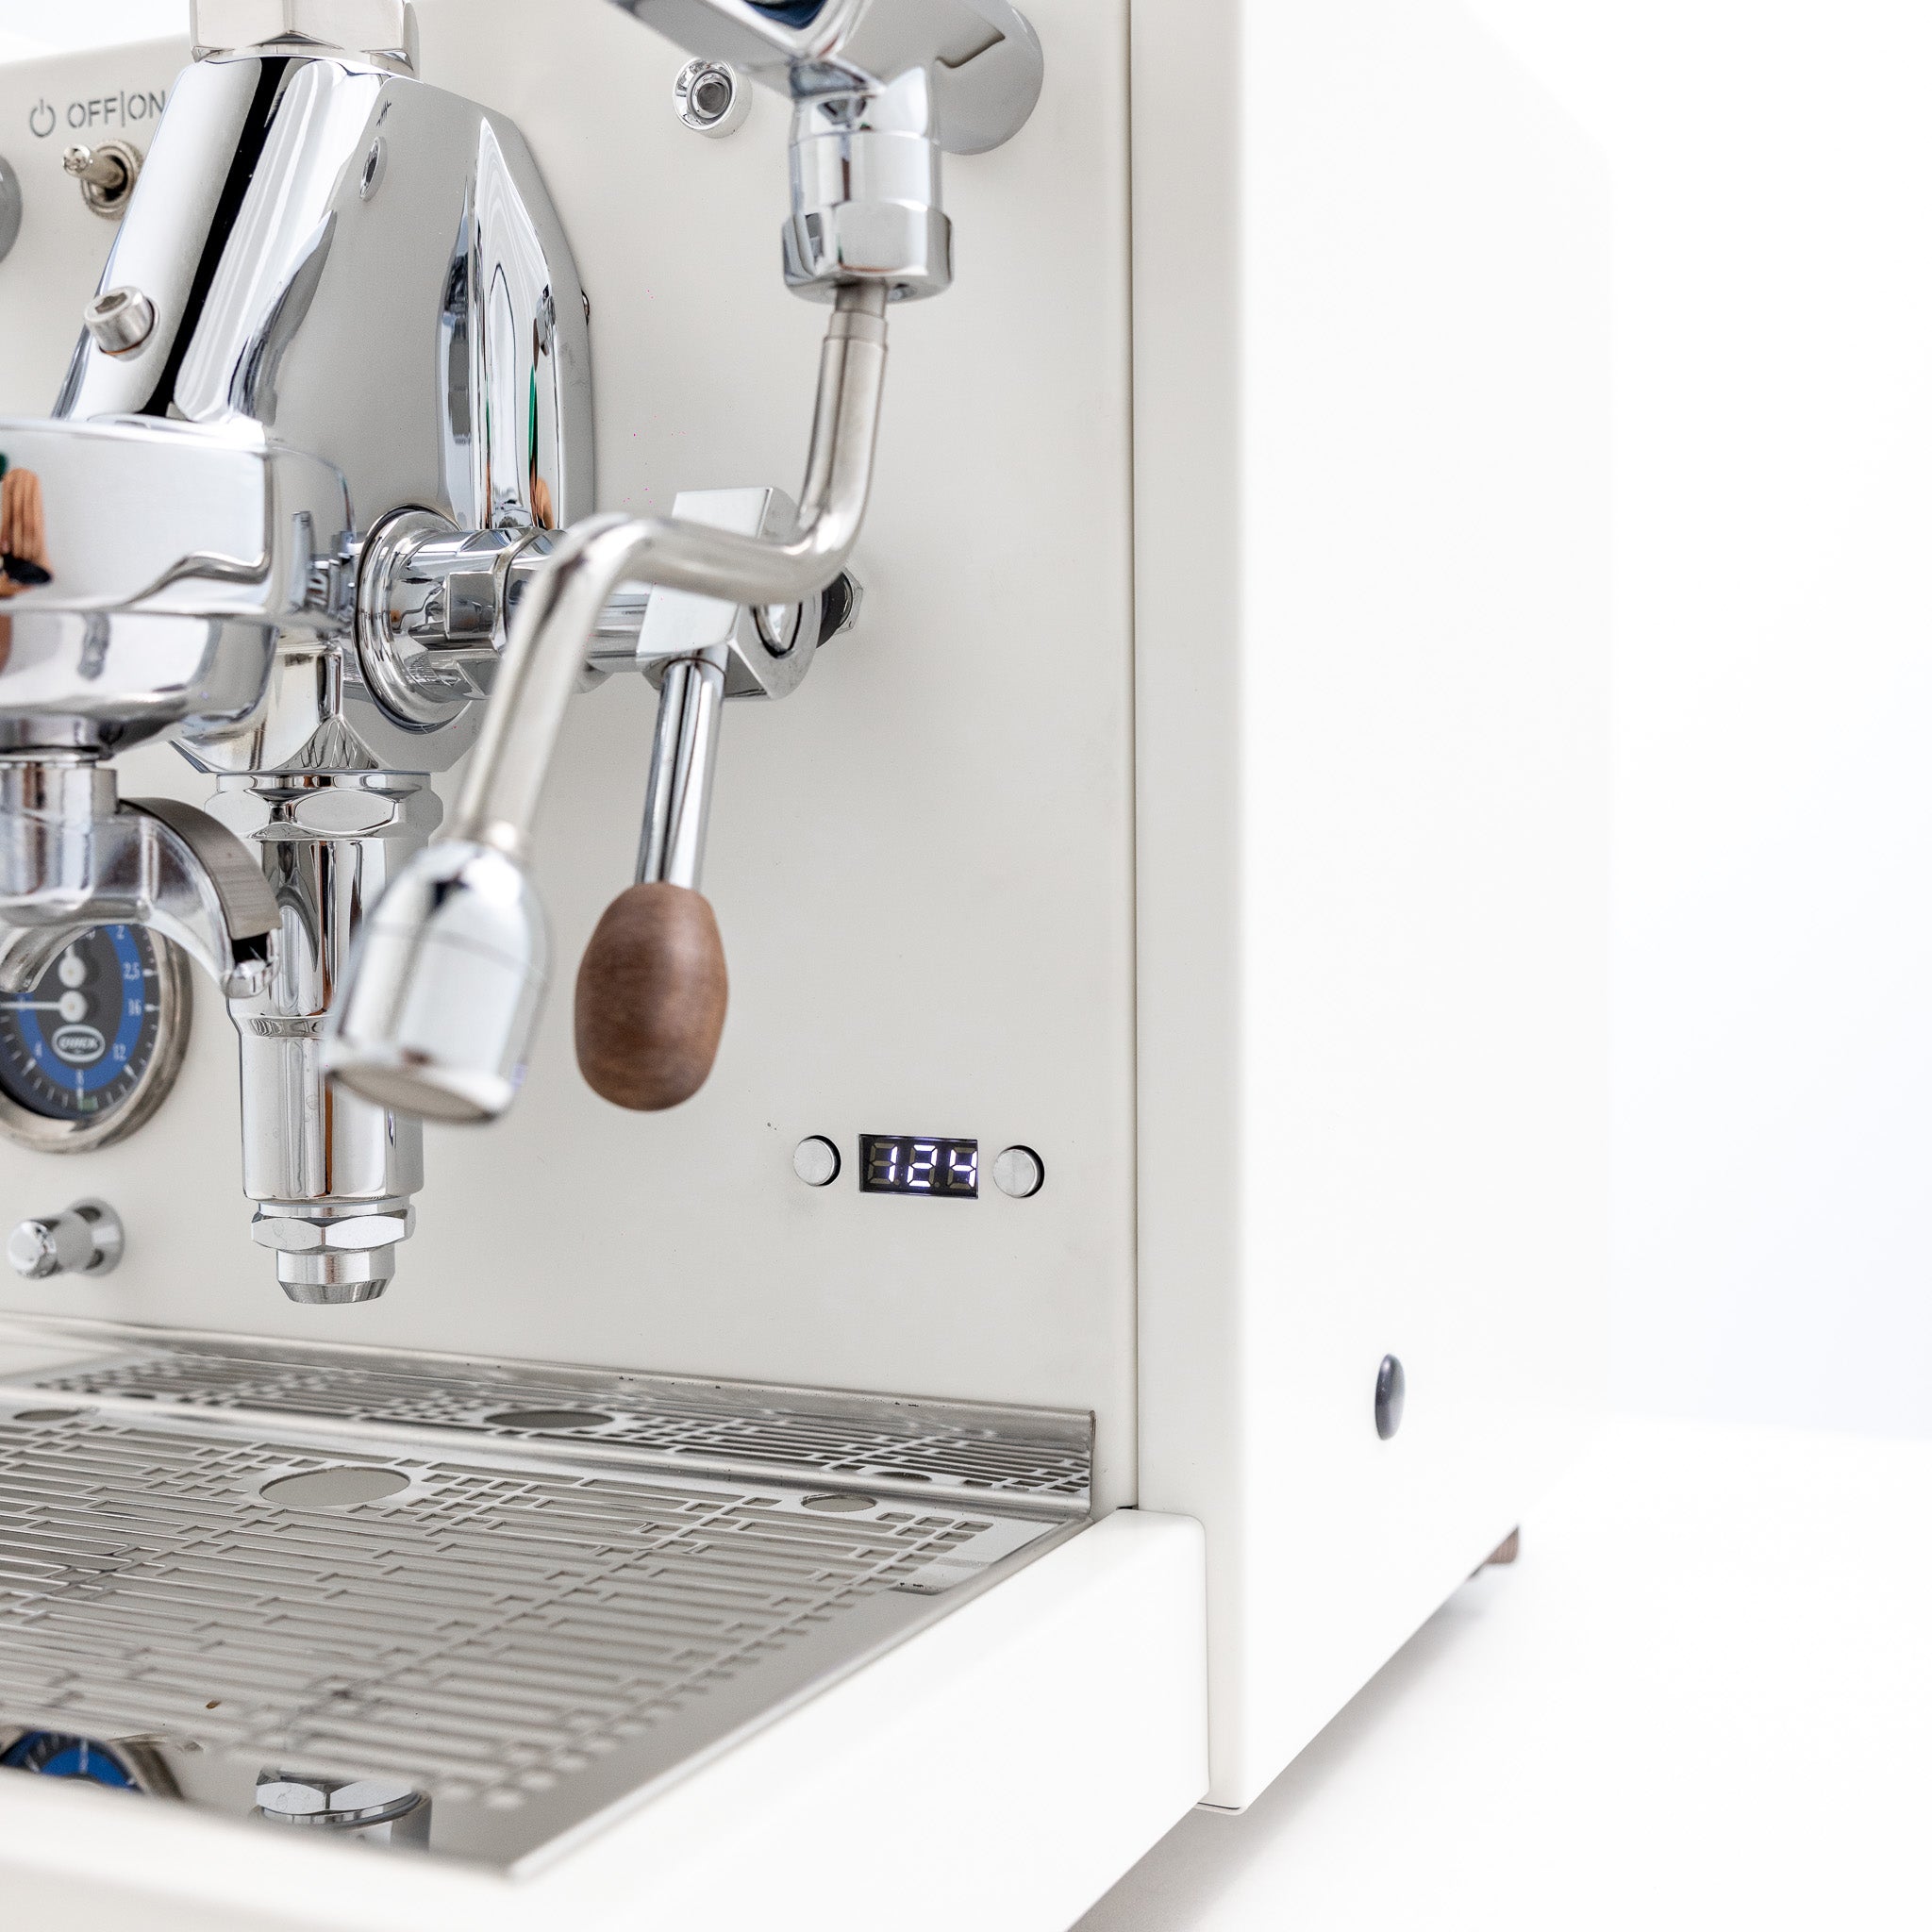 Quick Mill Aquila Profi White Coffee Machine